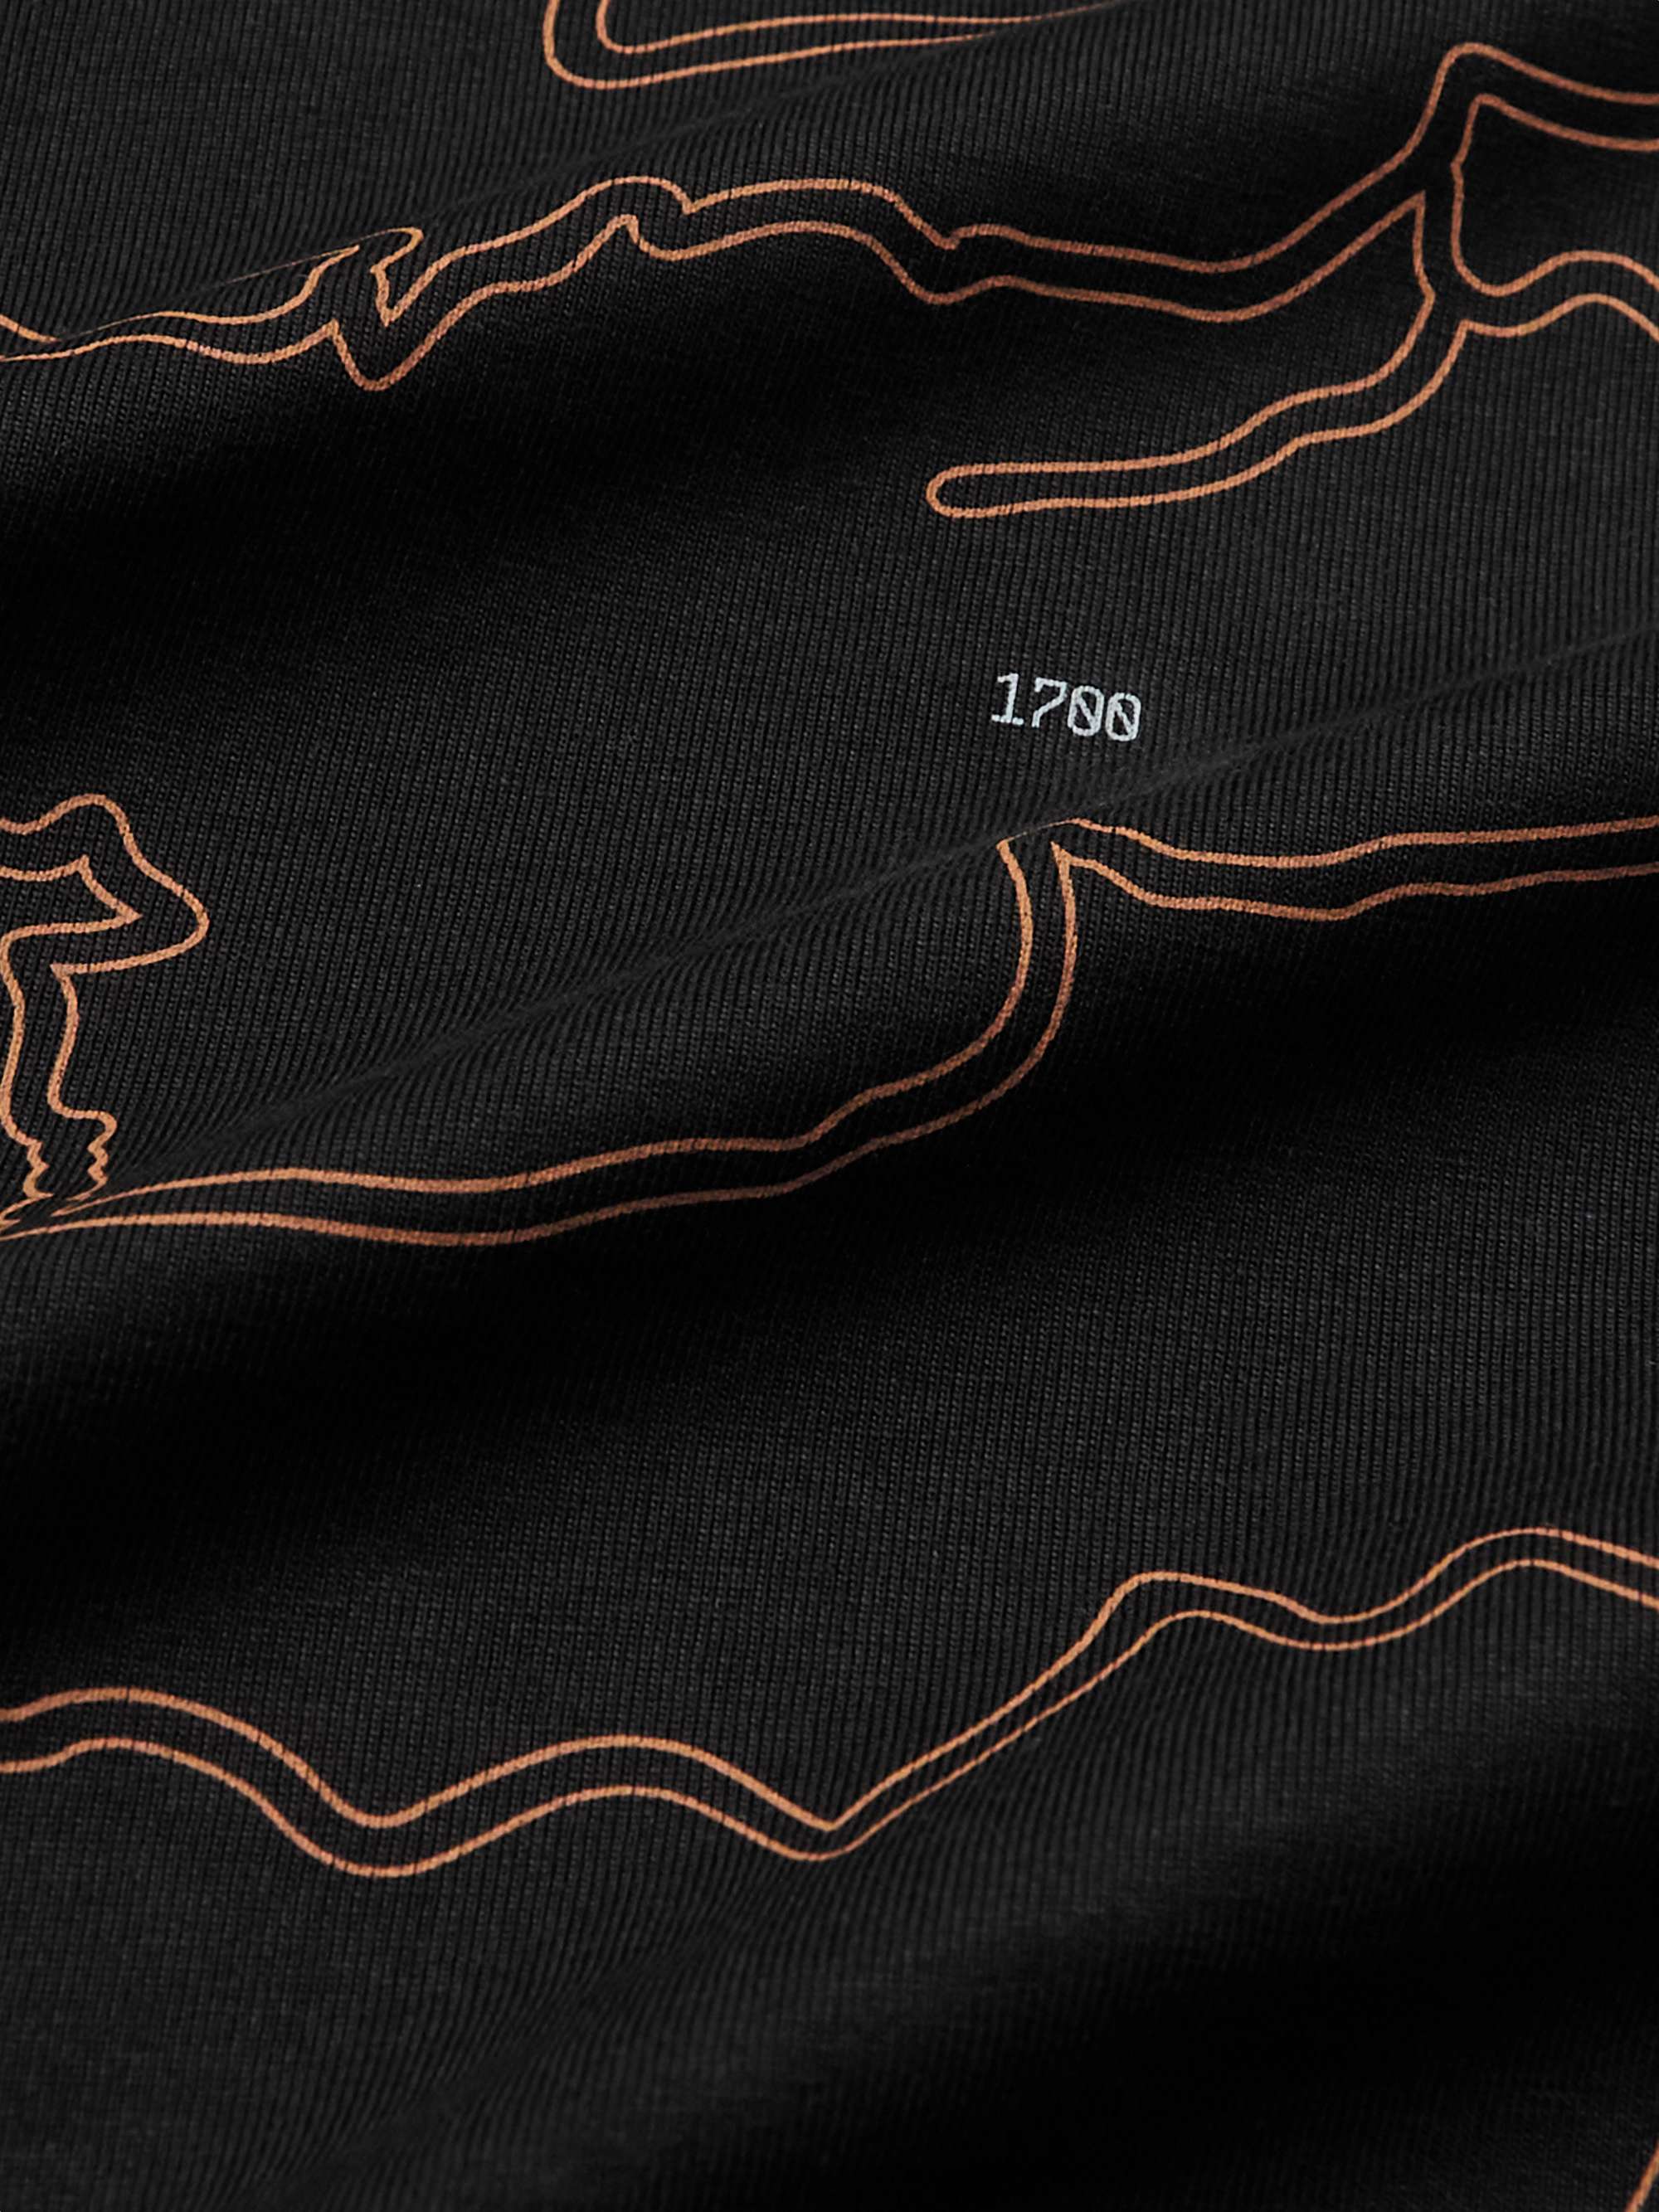 ZEGNA Logo-Print Cotton-Jersey T-Shirt